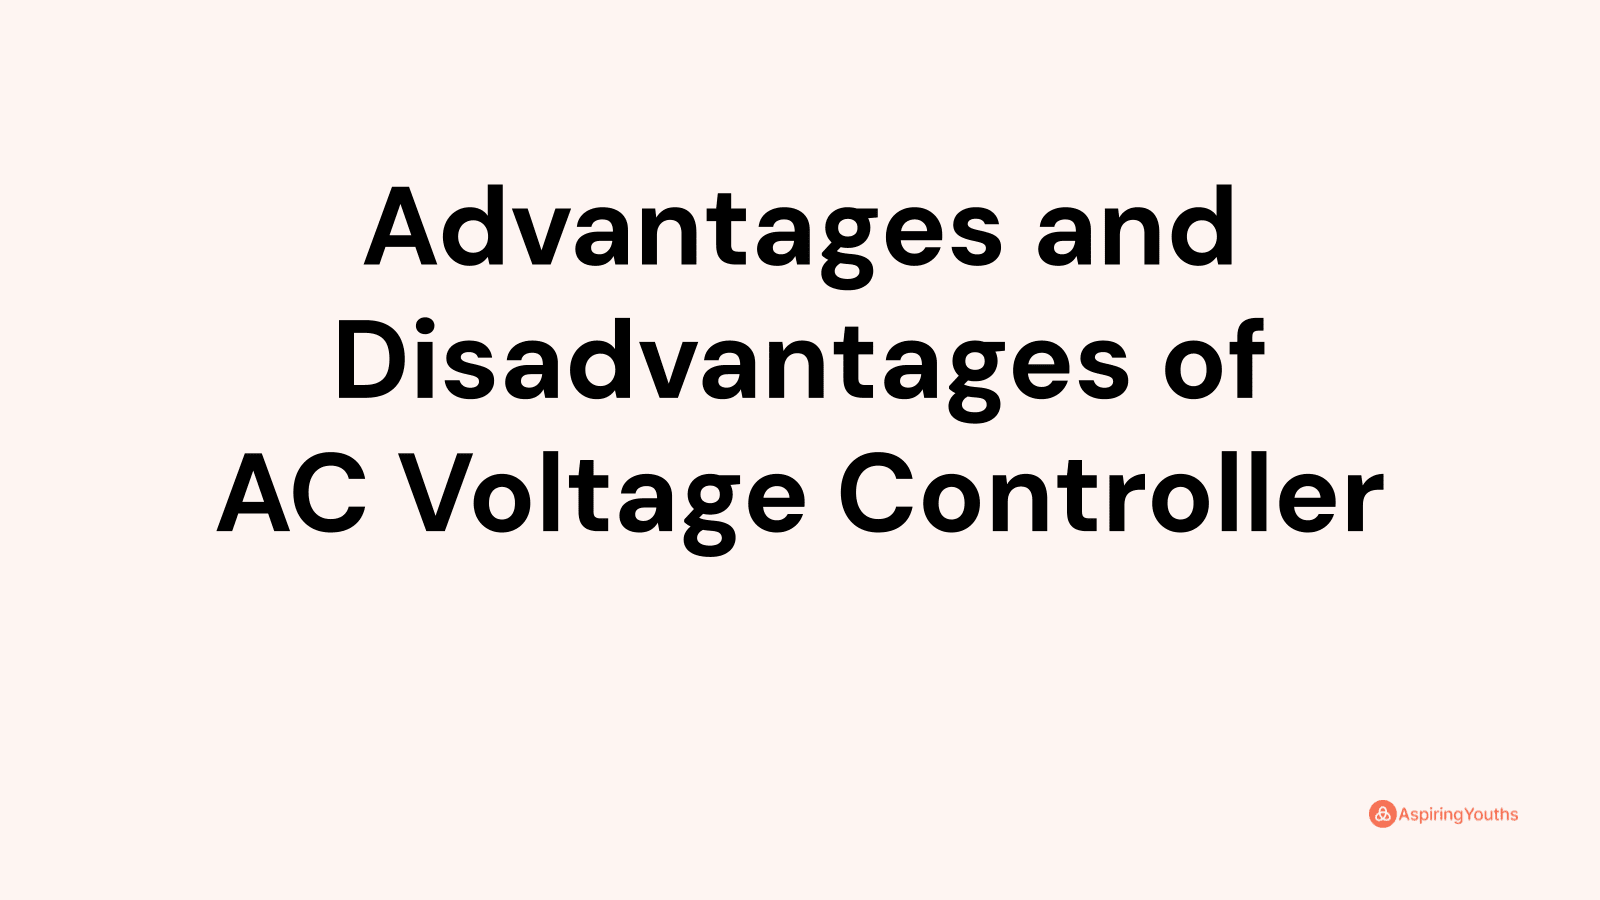 Advantages and disadvantages of AC Voltage Controller